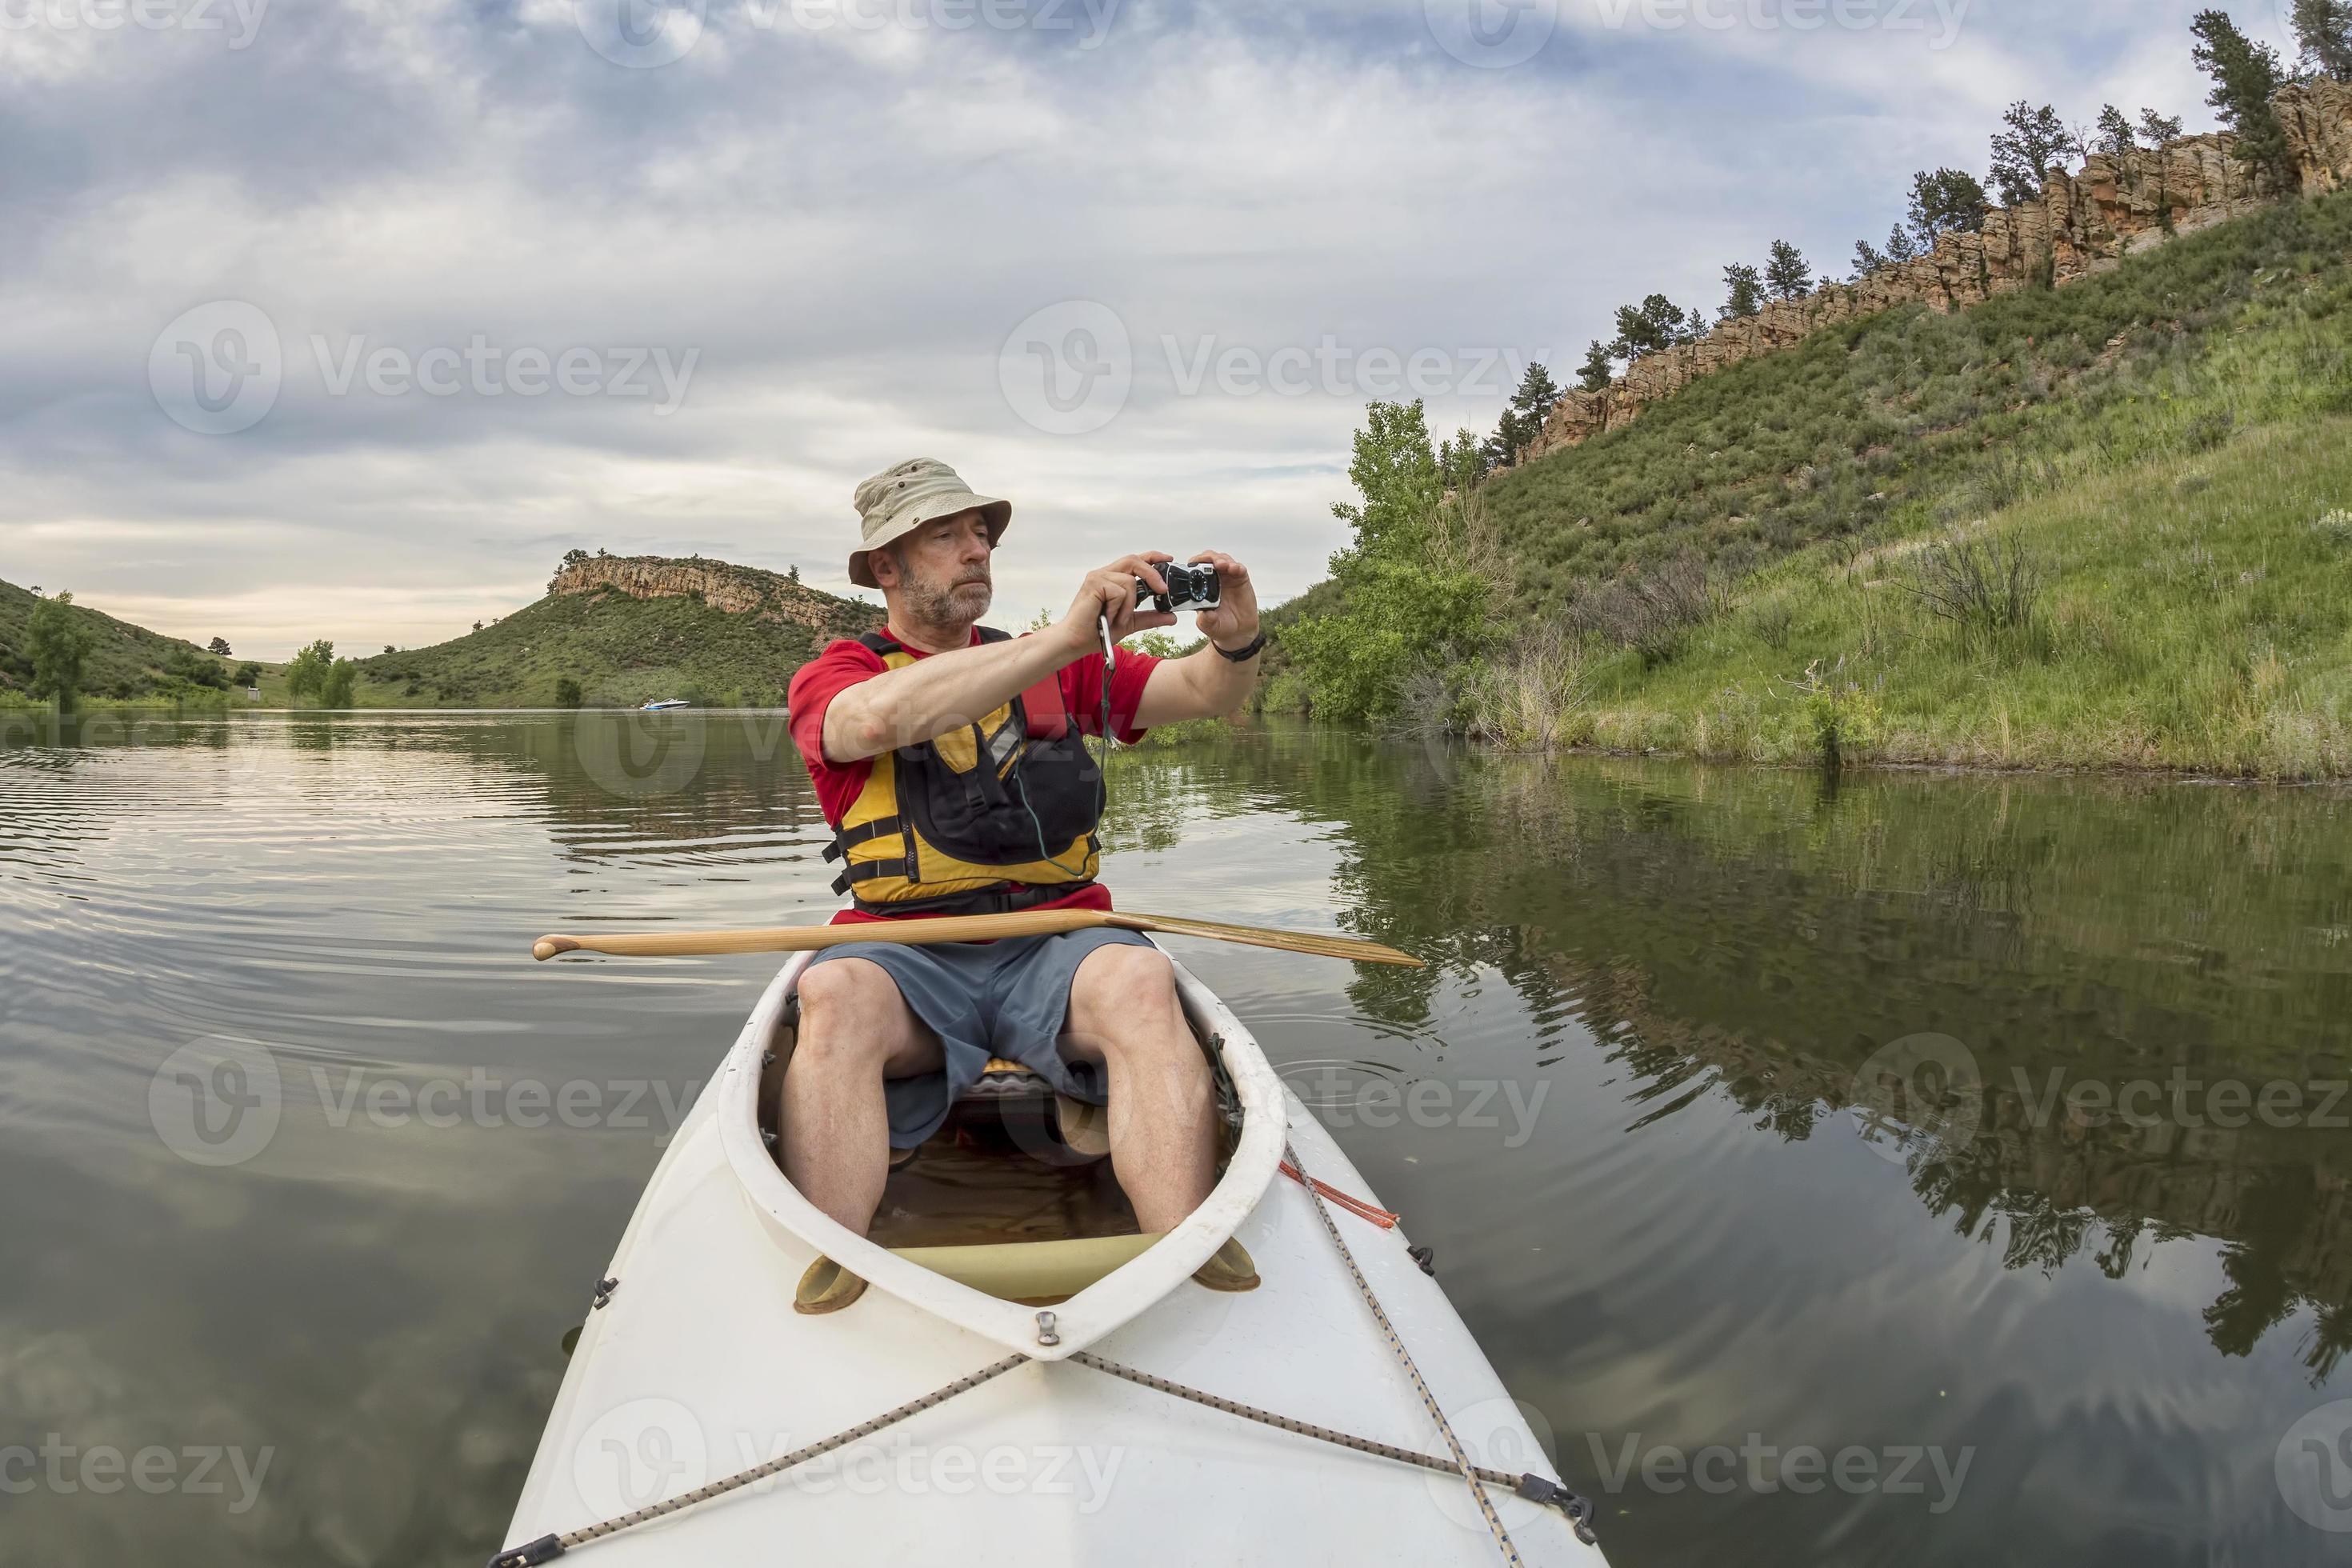 remador de canoa fotografando foto